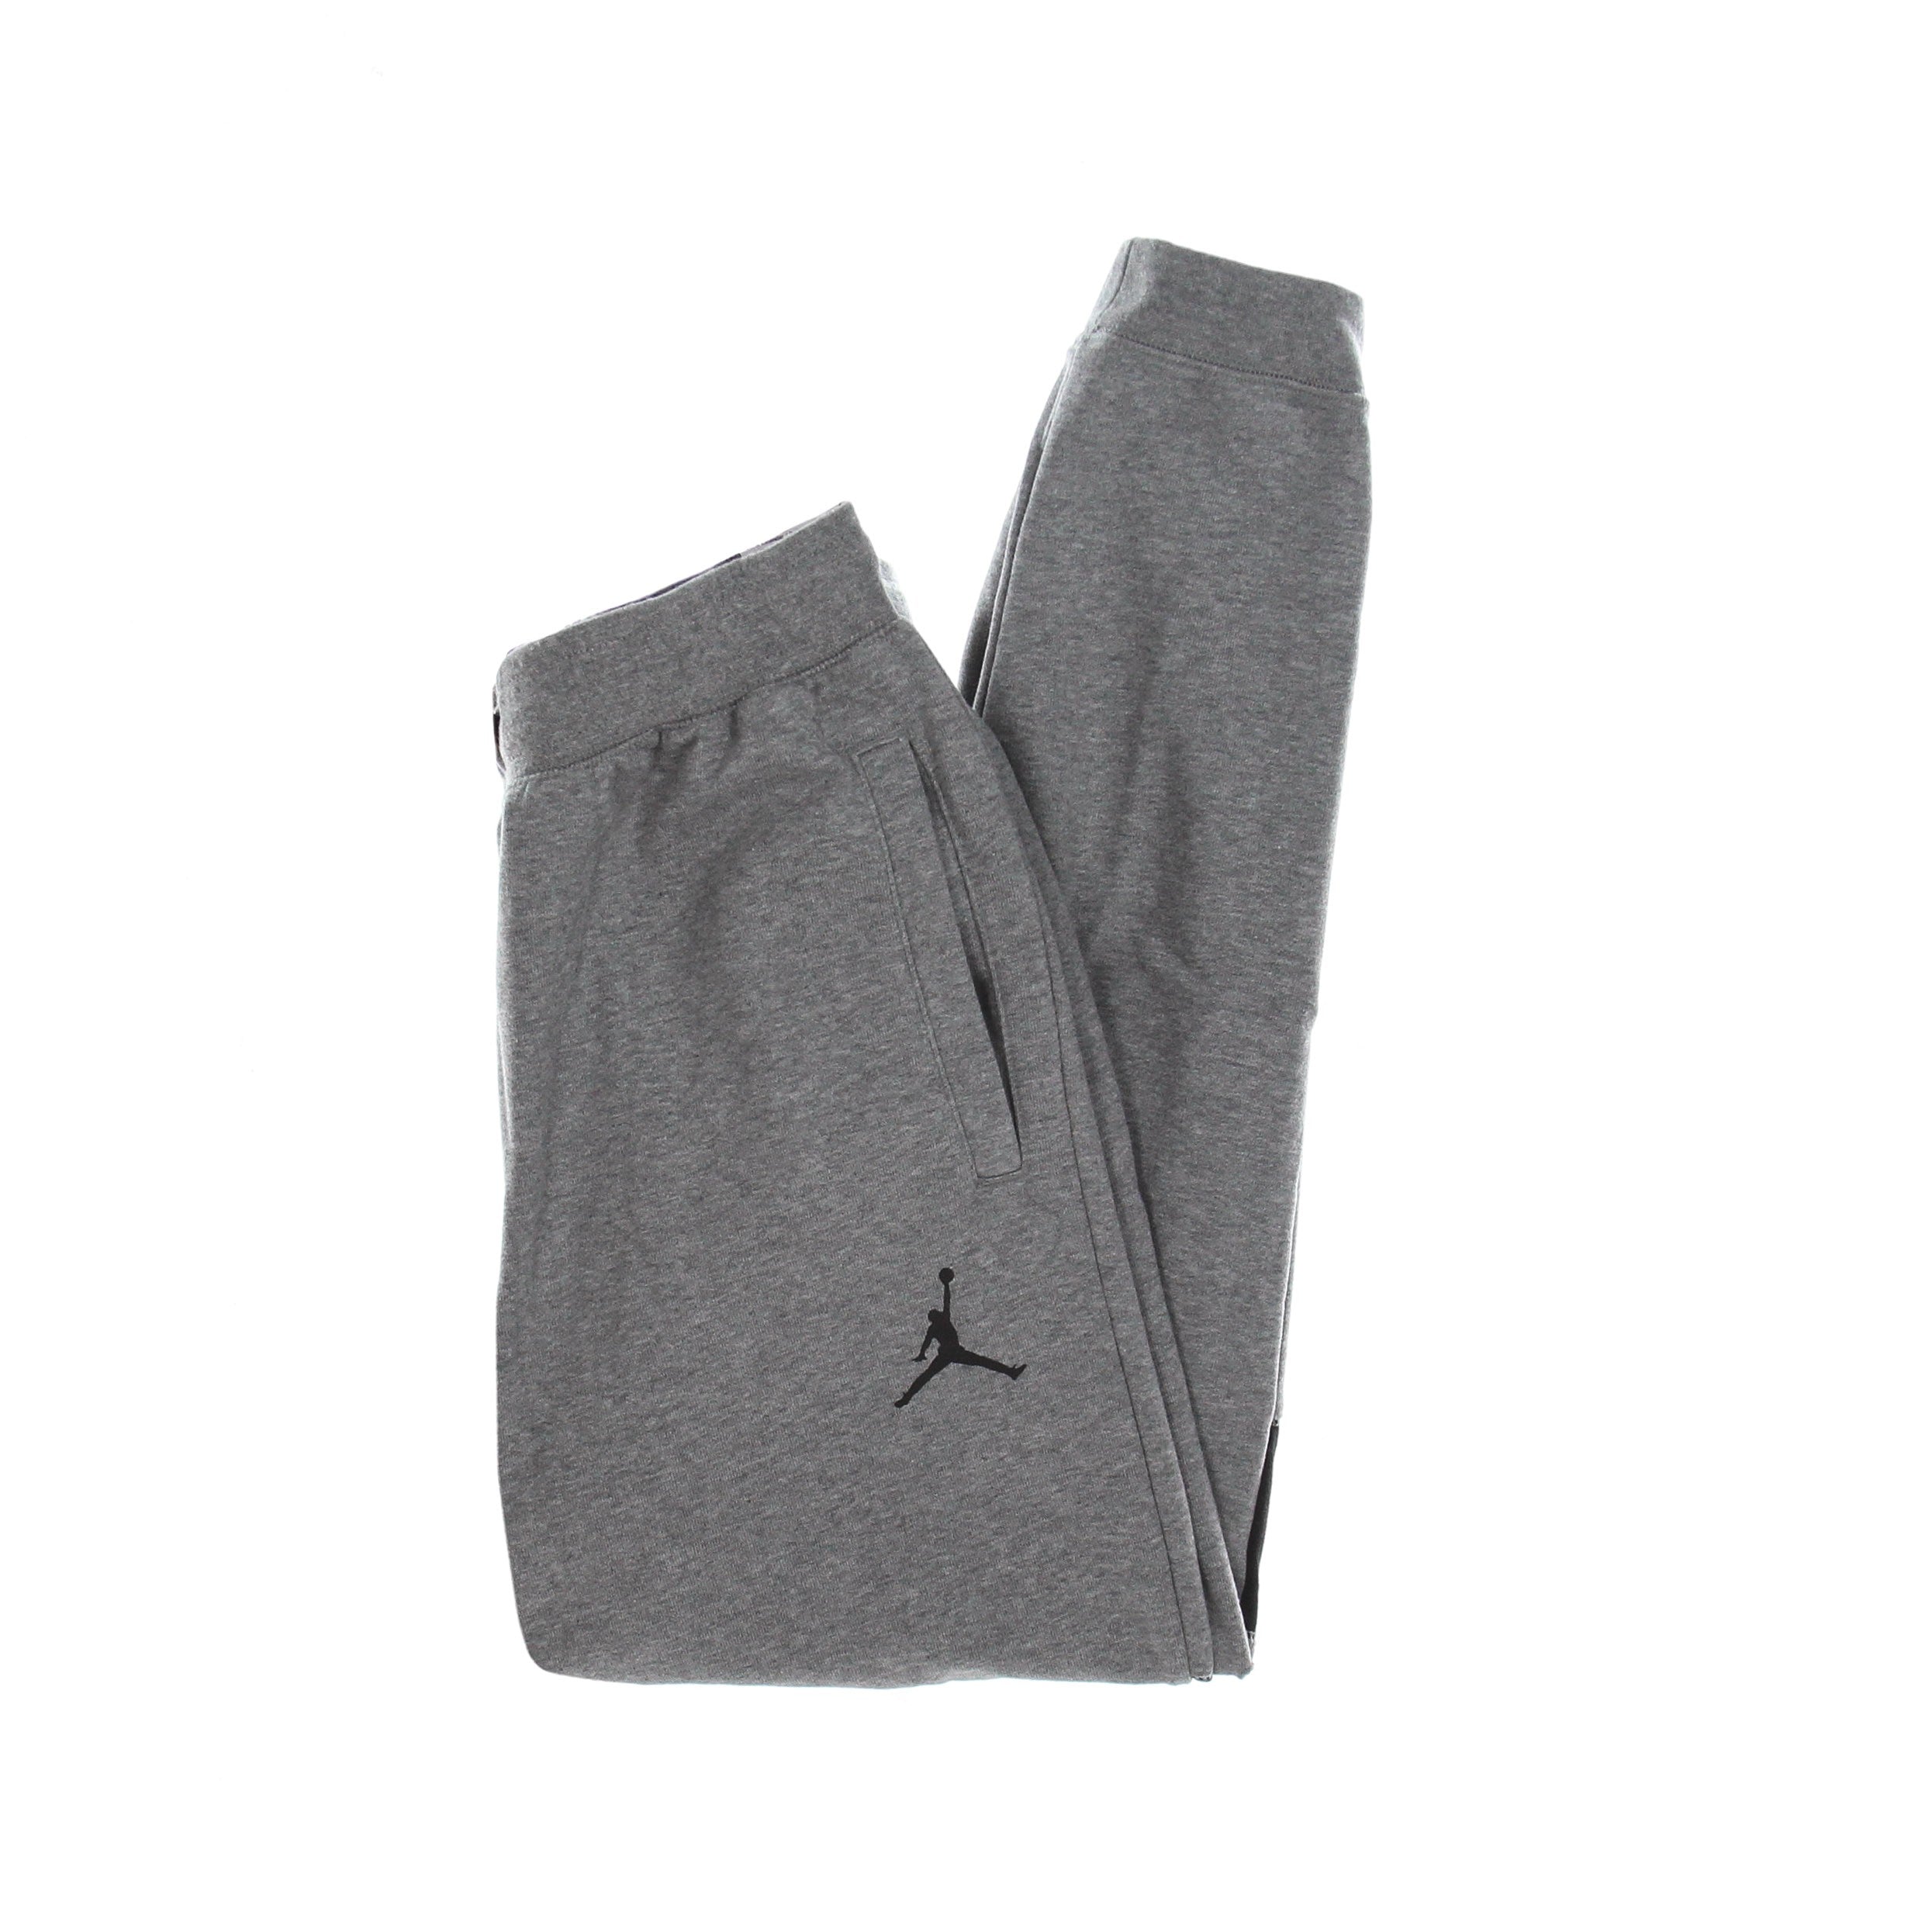 Jordan, Pantalone Tuta Leggero Uomo Dri-fit Air Fleece Pant, Carbon Heather/black